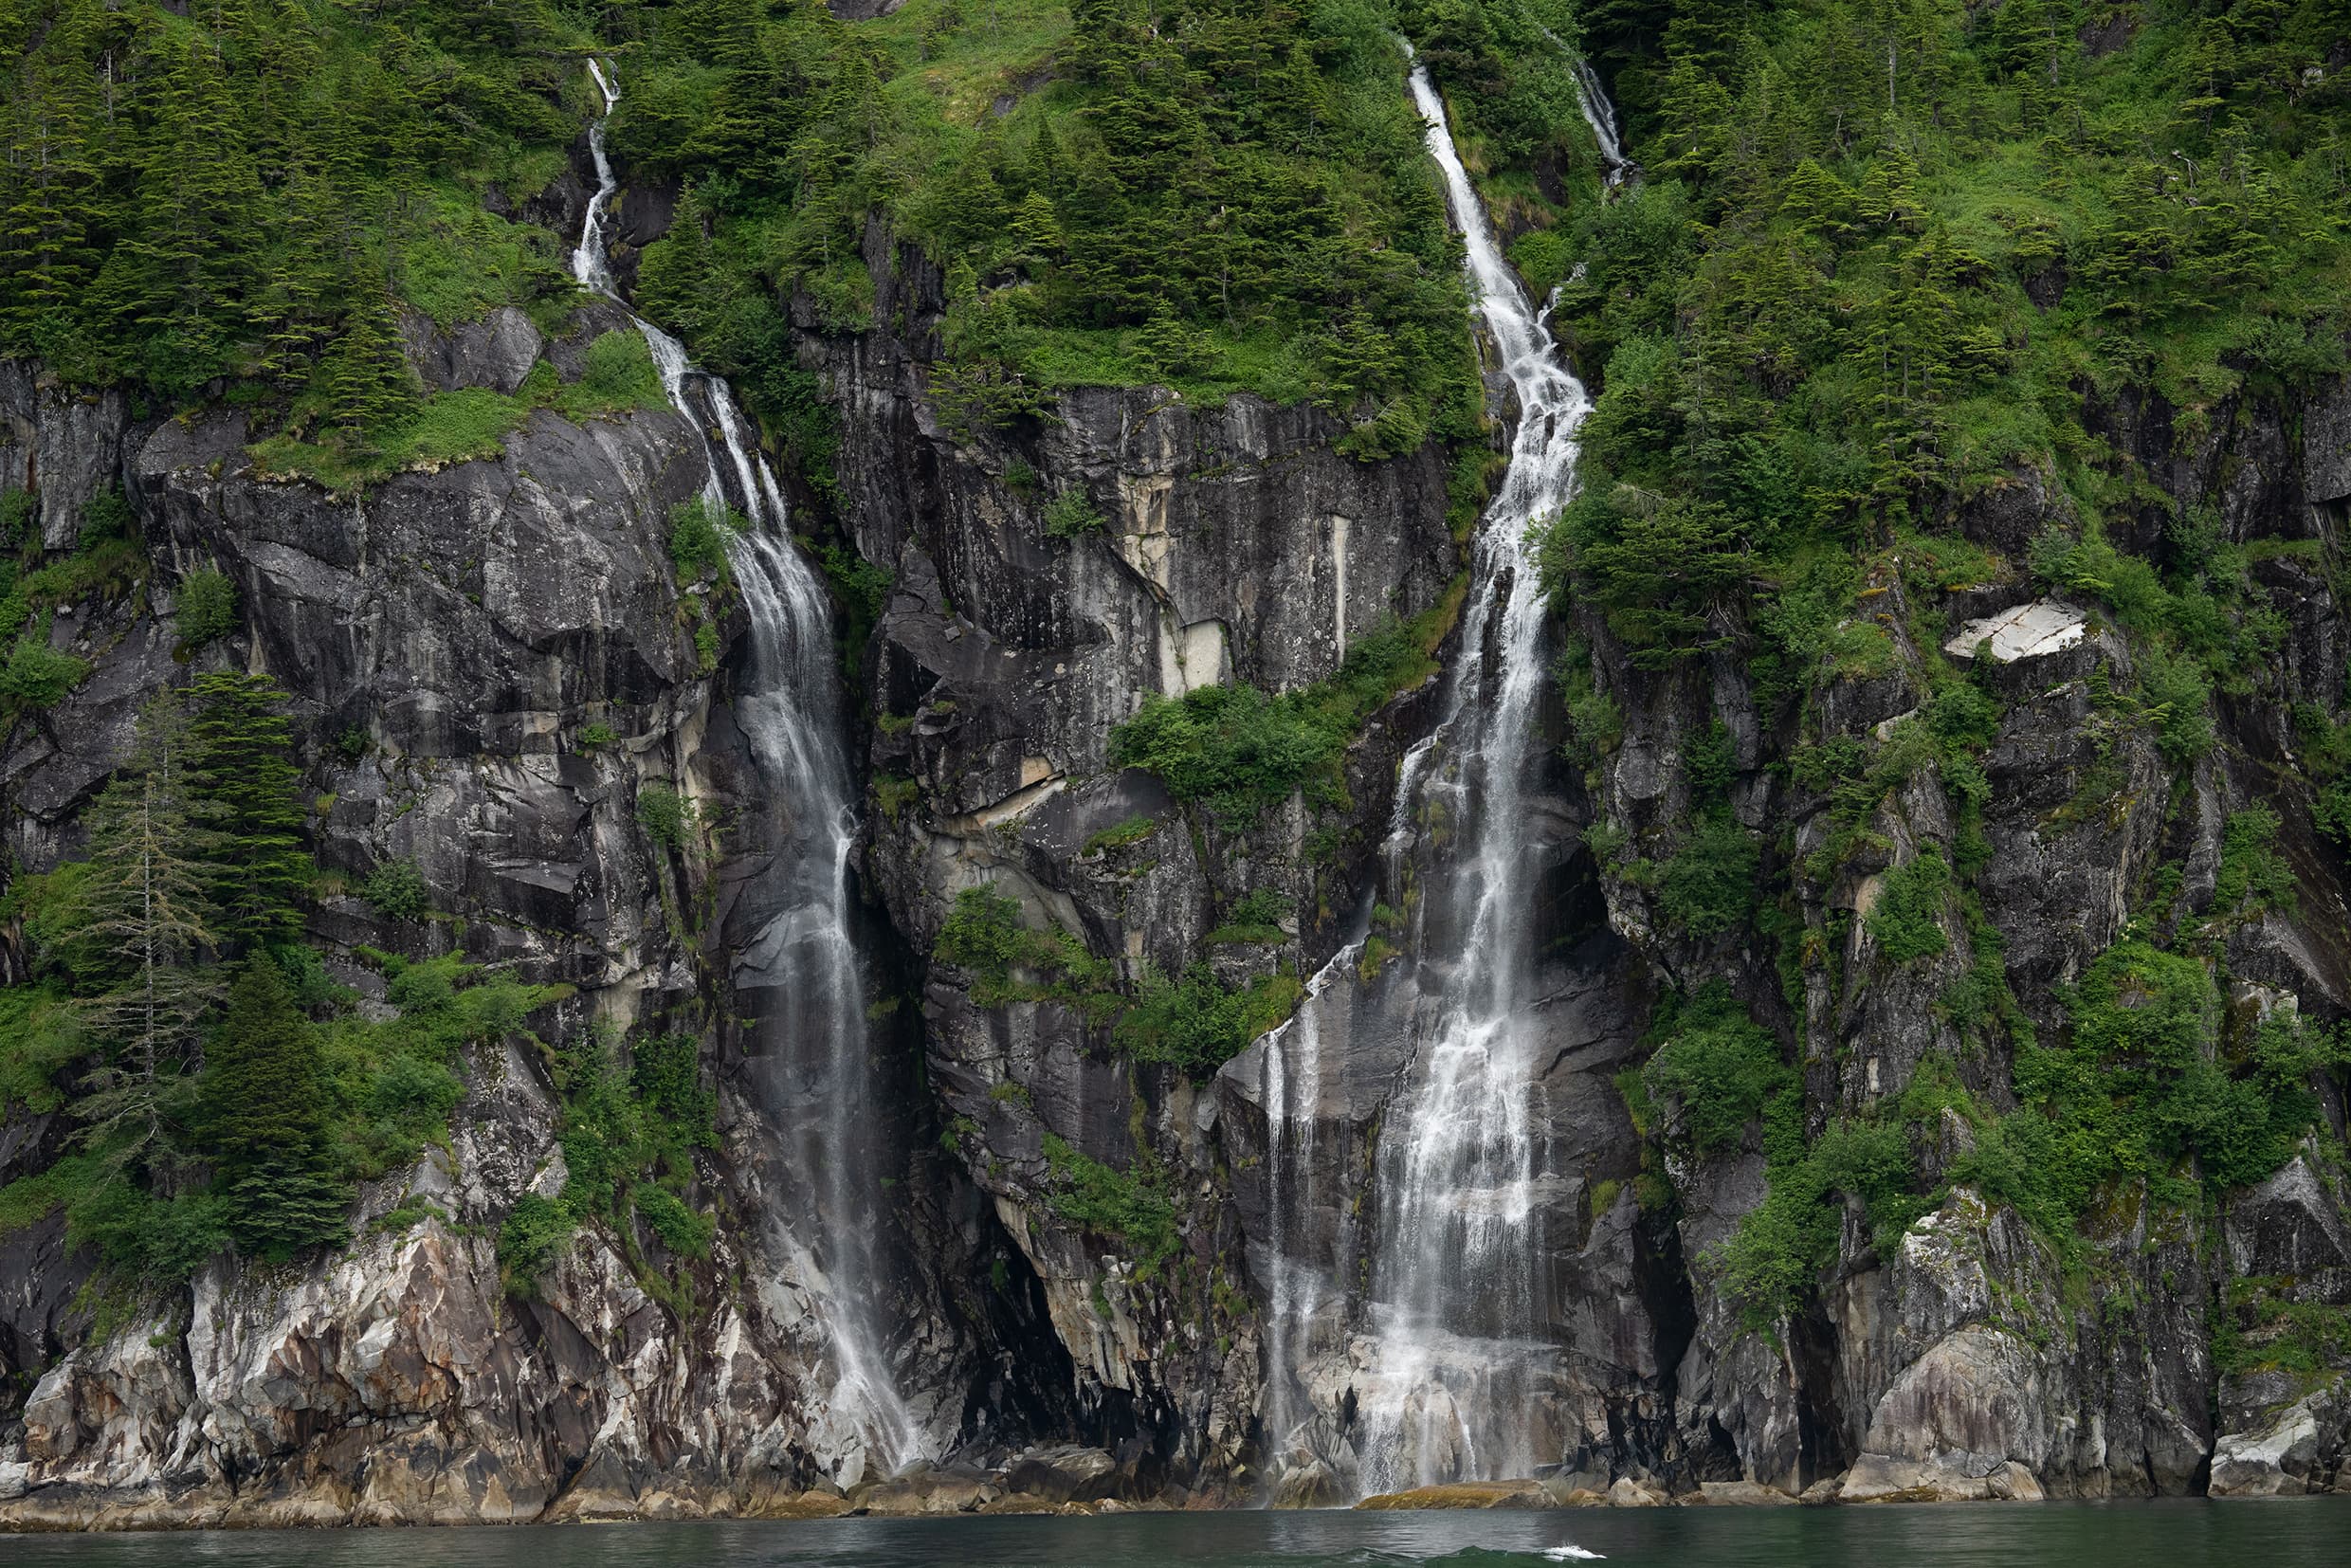 Fotka vodopádu fotena pomocou objektívu Tamron 150-500mm pre Nikon Z